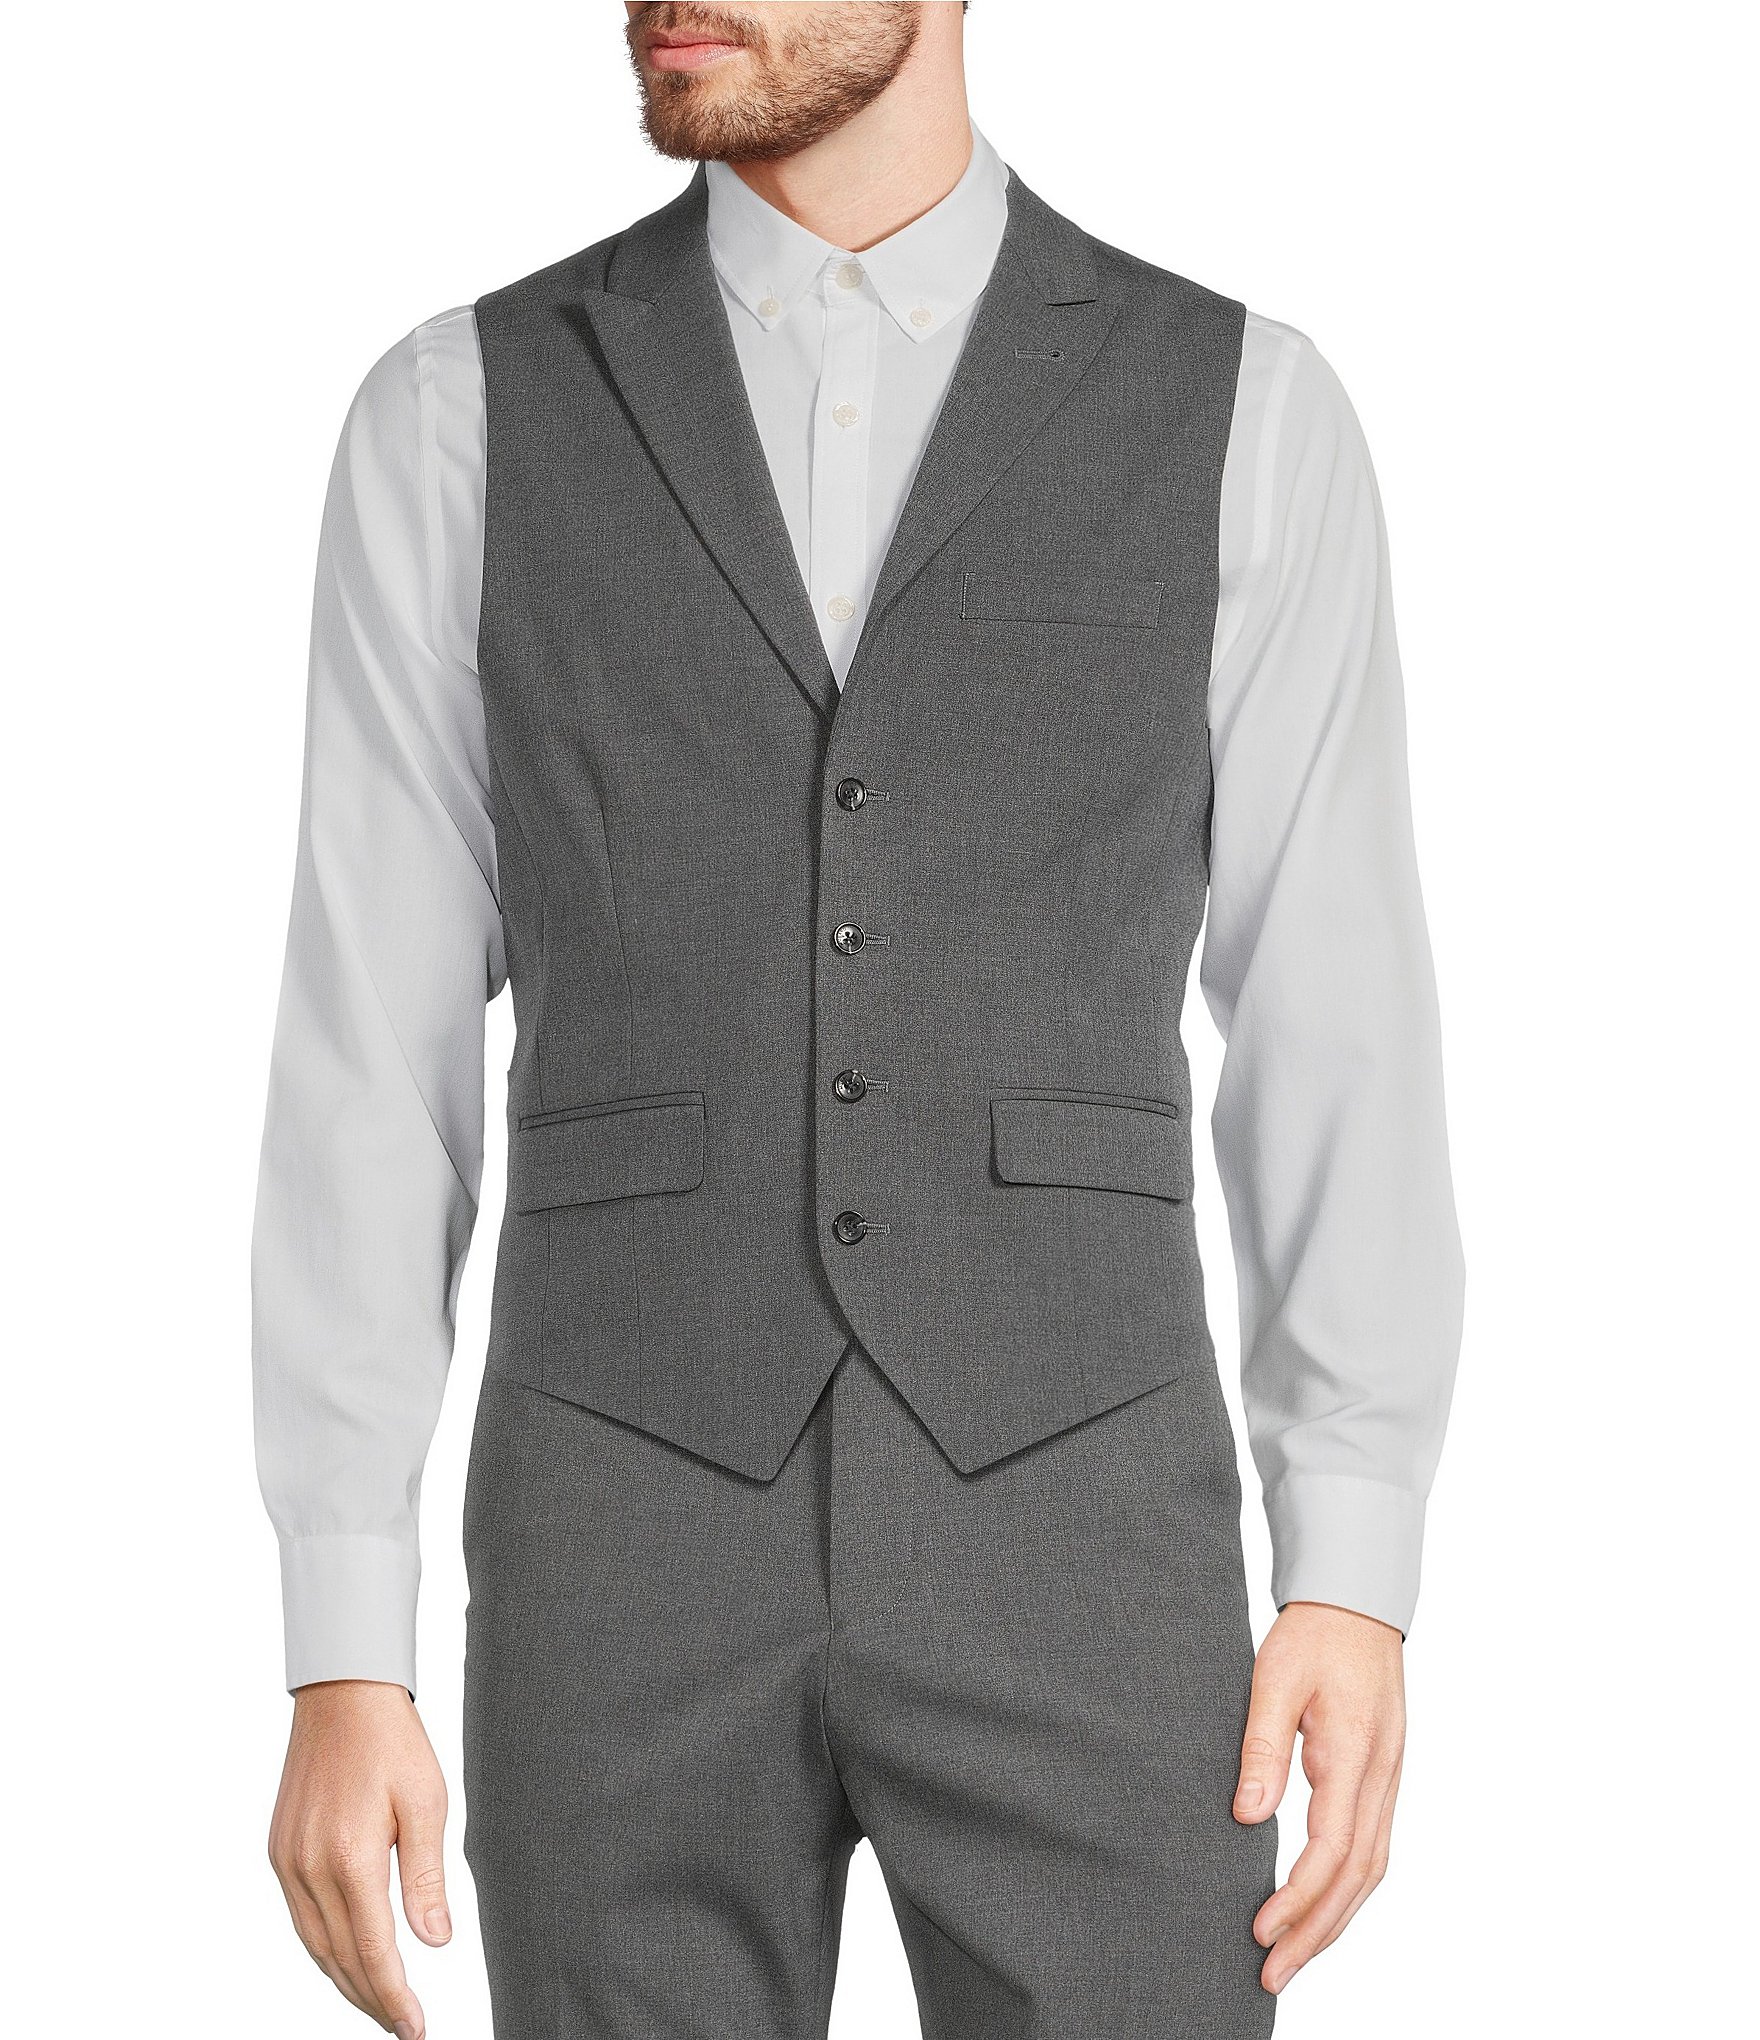 Murano Wardrobe Essentials Shawl Suit Separates Vest | Dillard's